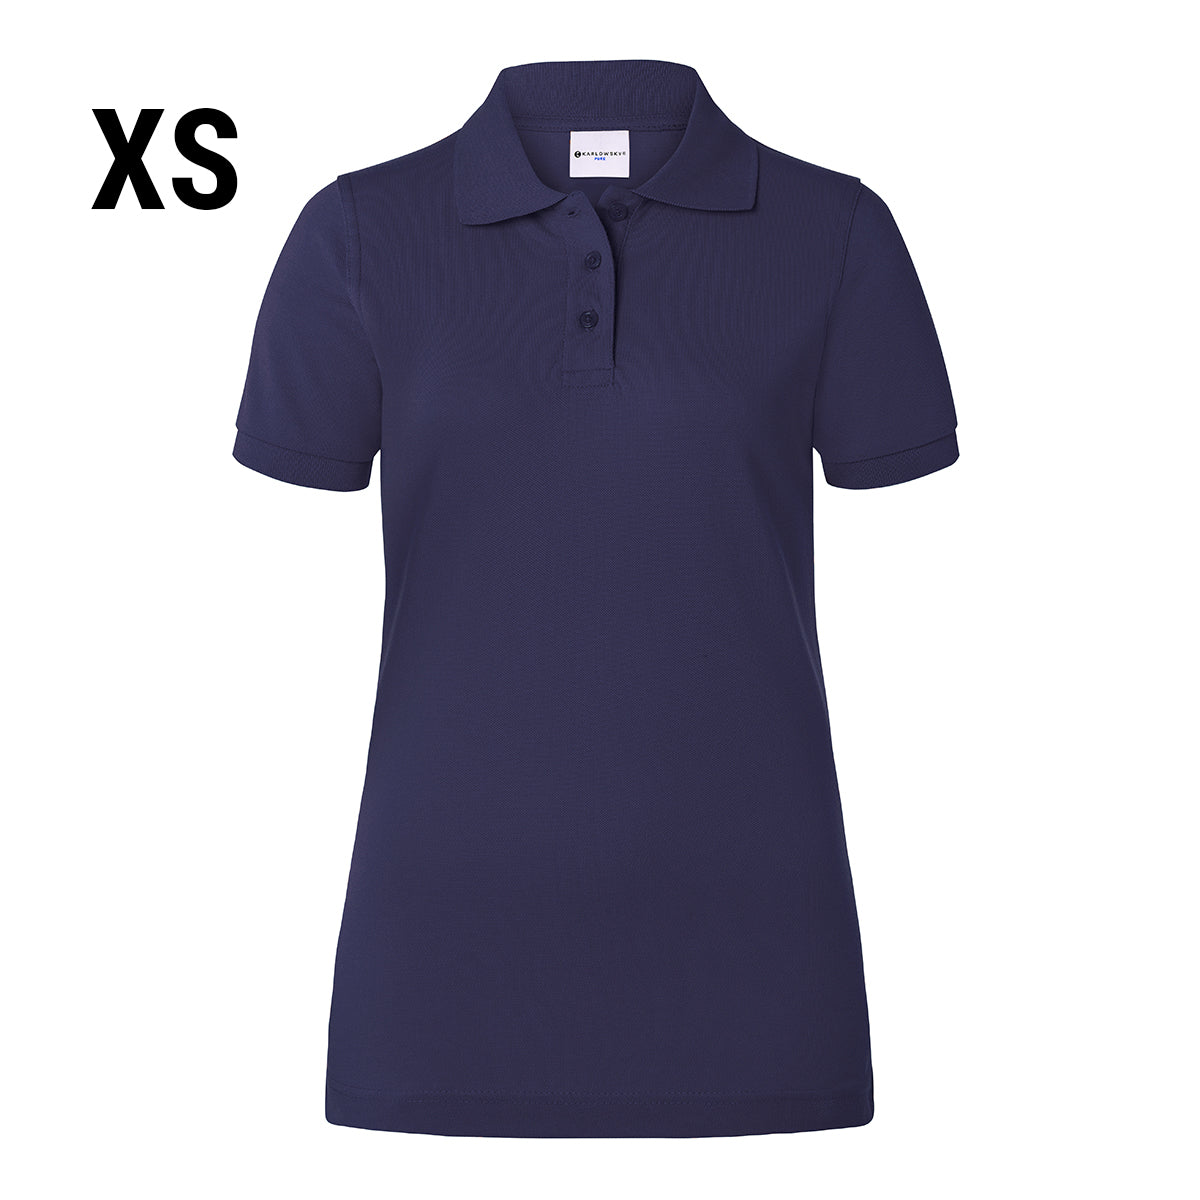 Karlowsky - Arbejdsbeklædning Basic Poloshirt til damer - Navy - Størrelse: XS